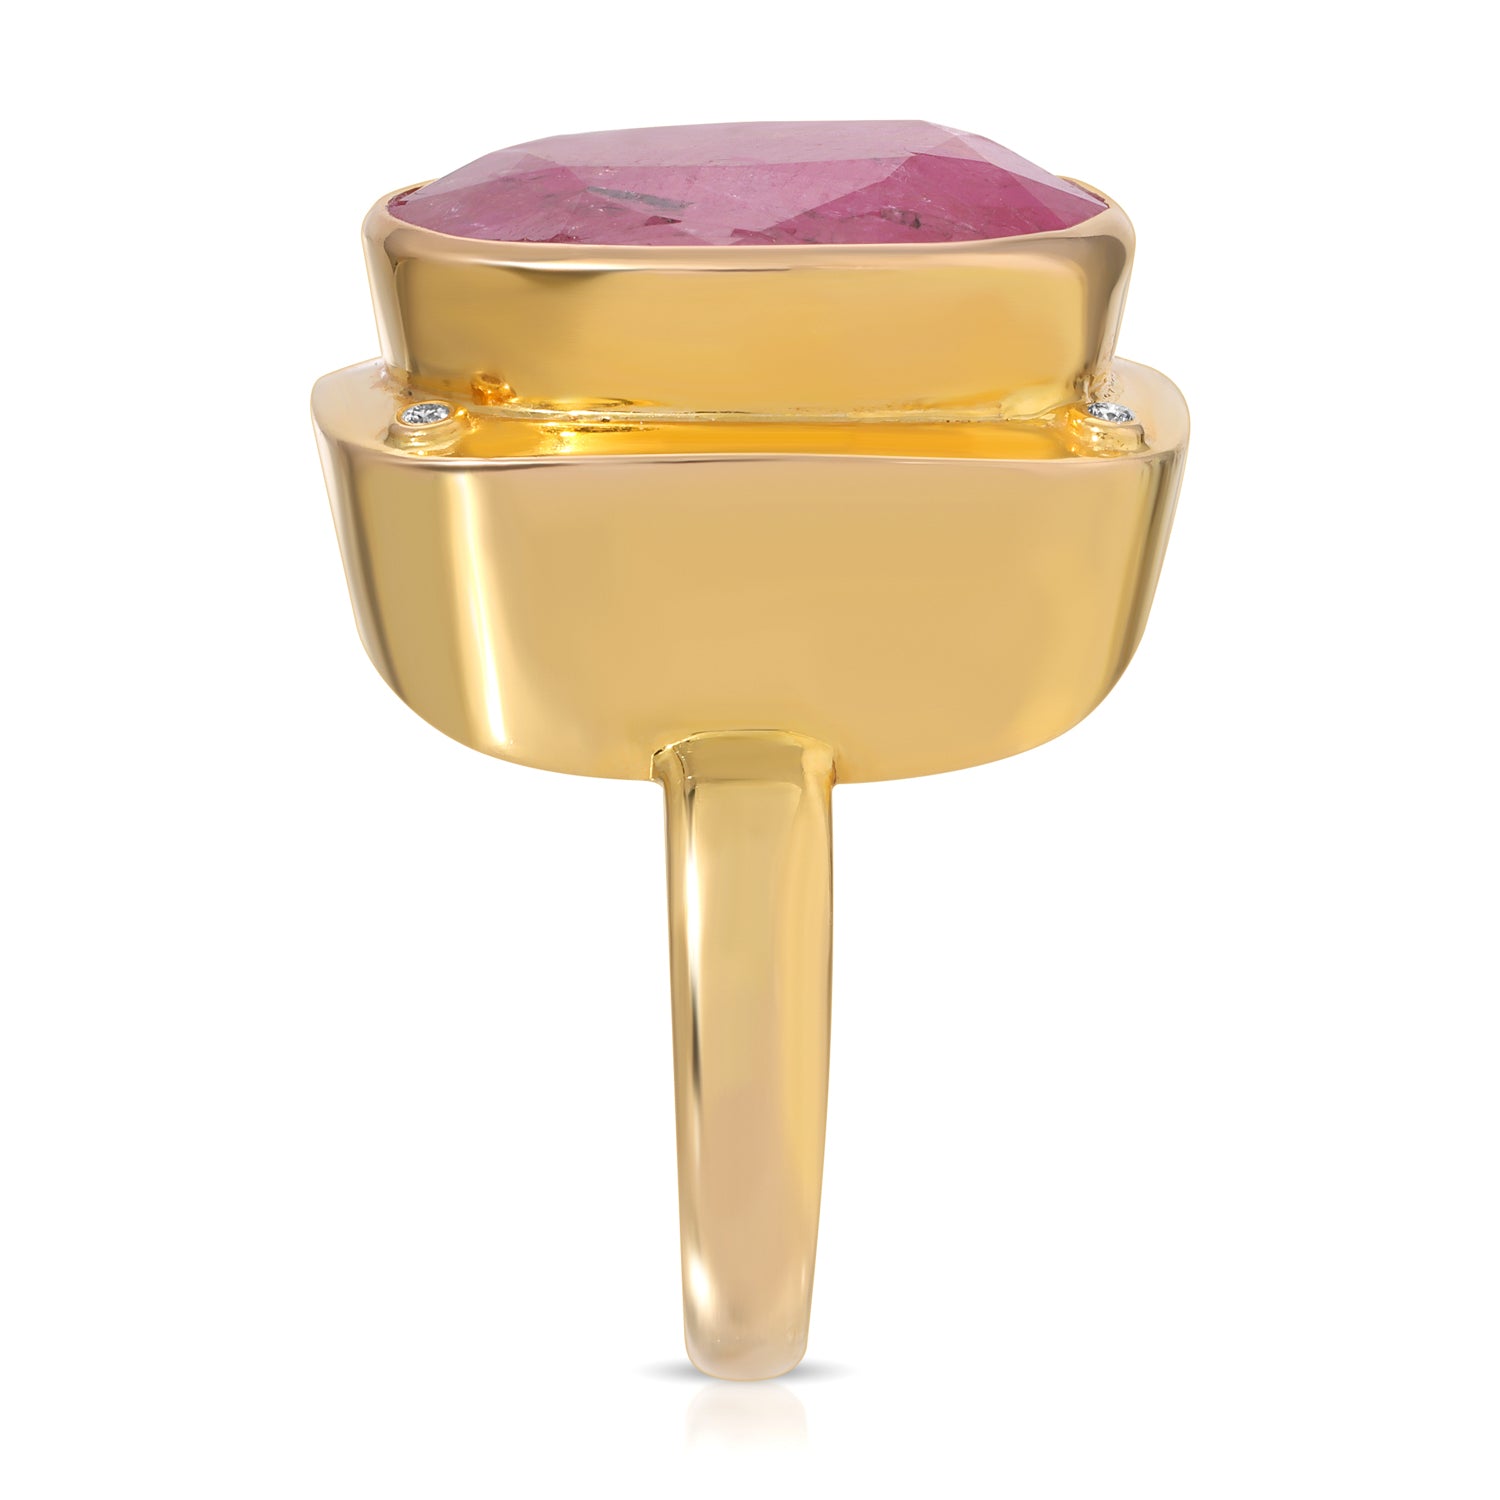 Burmese Pink Sapphire Diamond Cocktail Ring